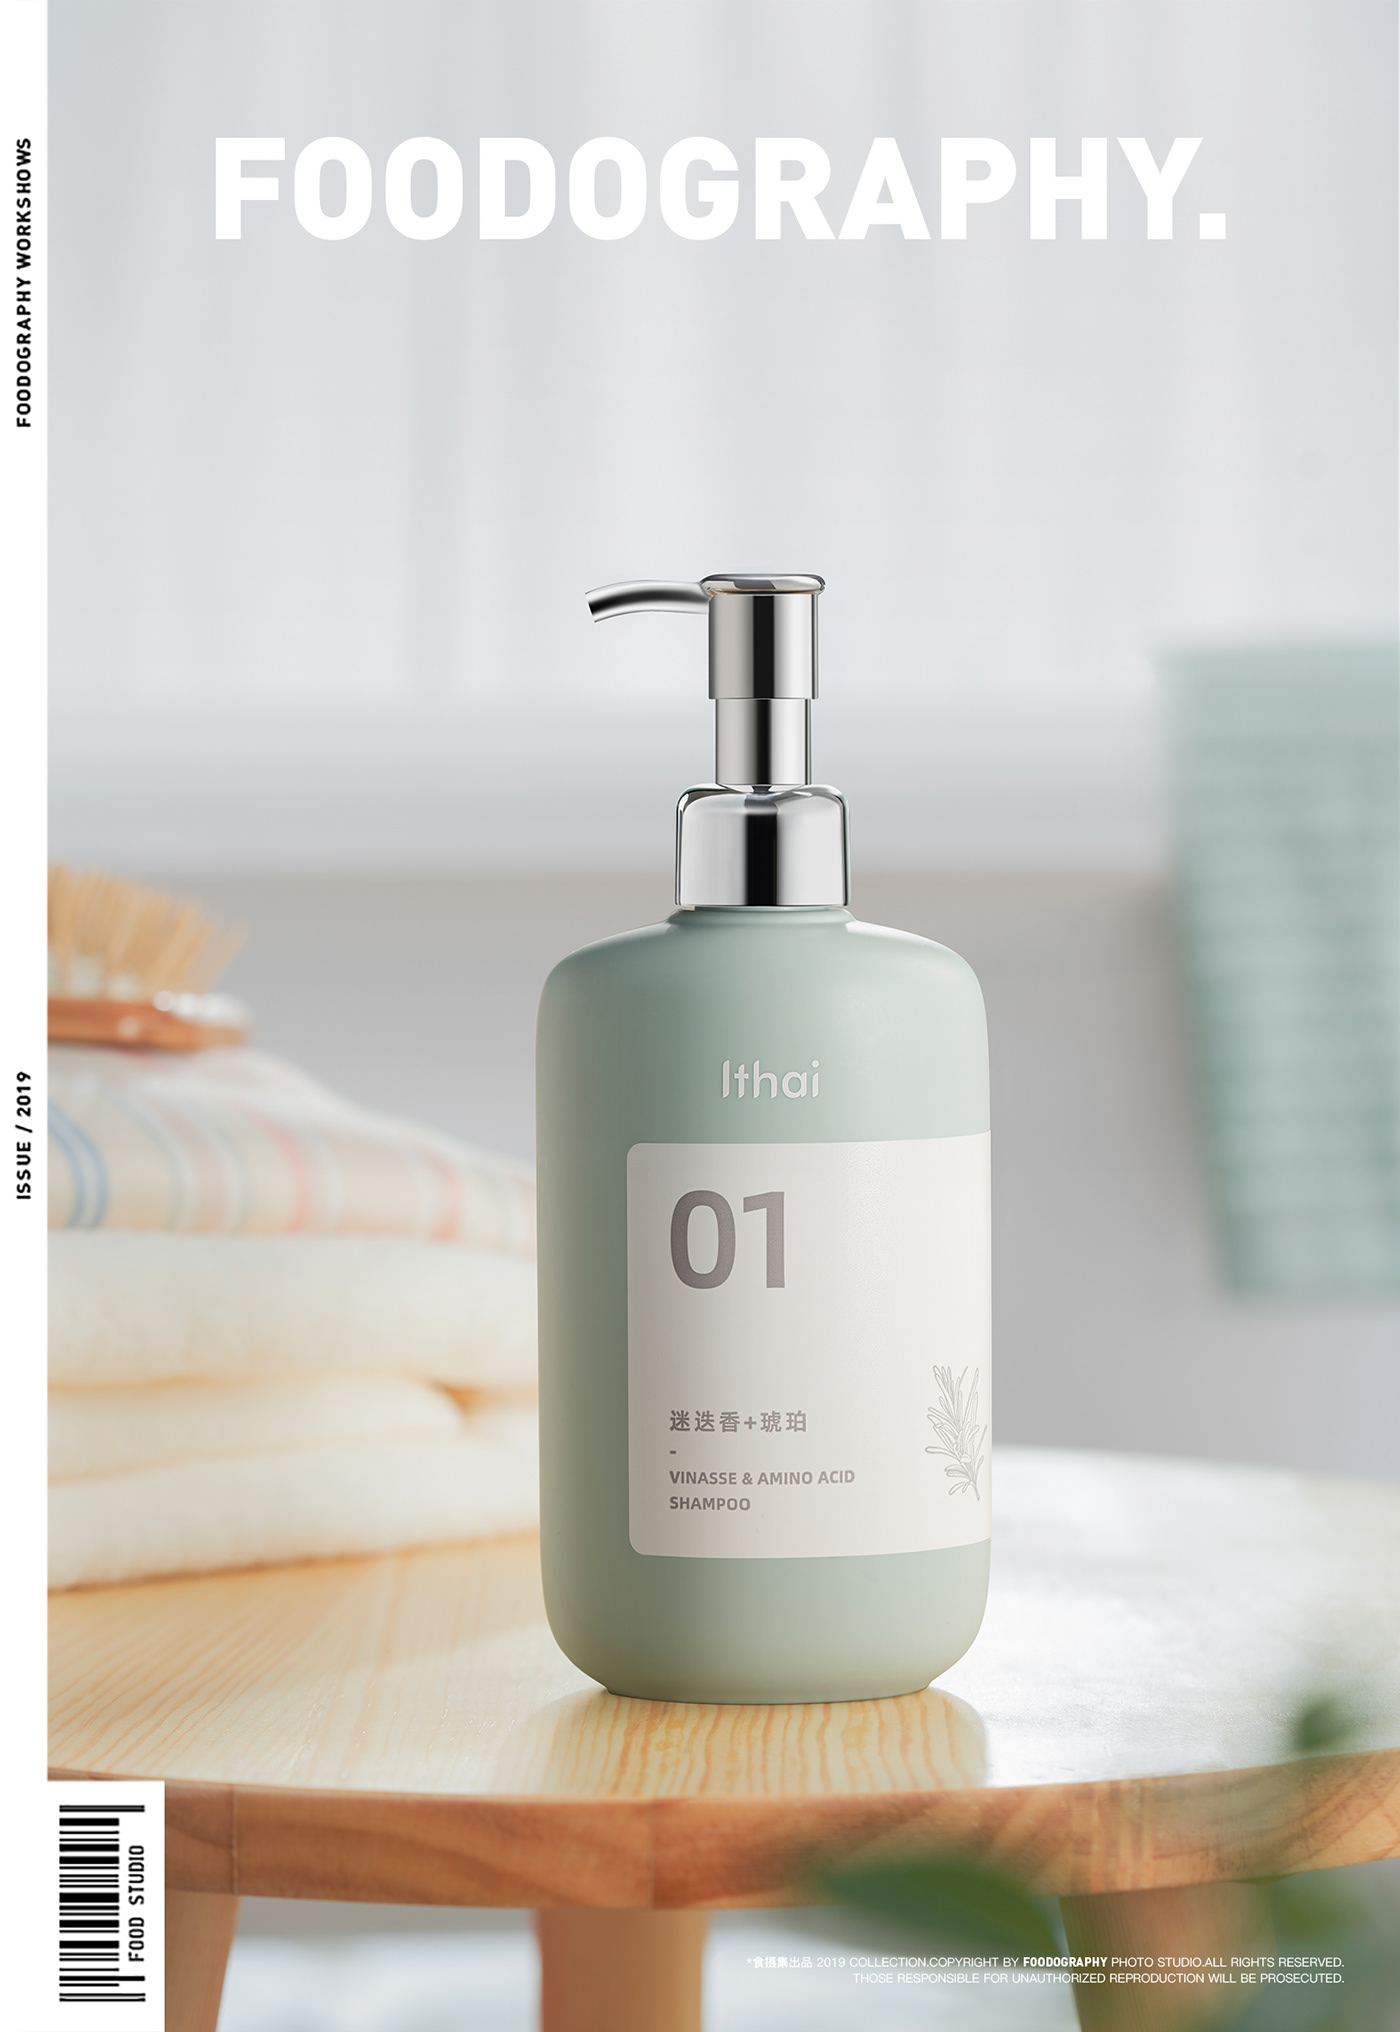 shampoo shower gel 洗发水 沐浴露 japan 日本 洗护 photo 产品摄影 Product Photography